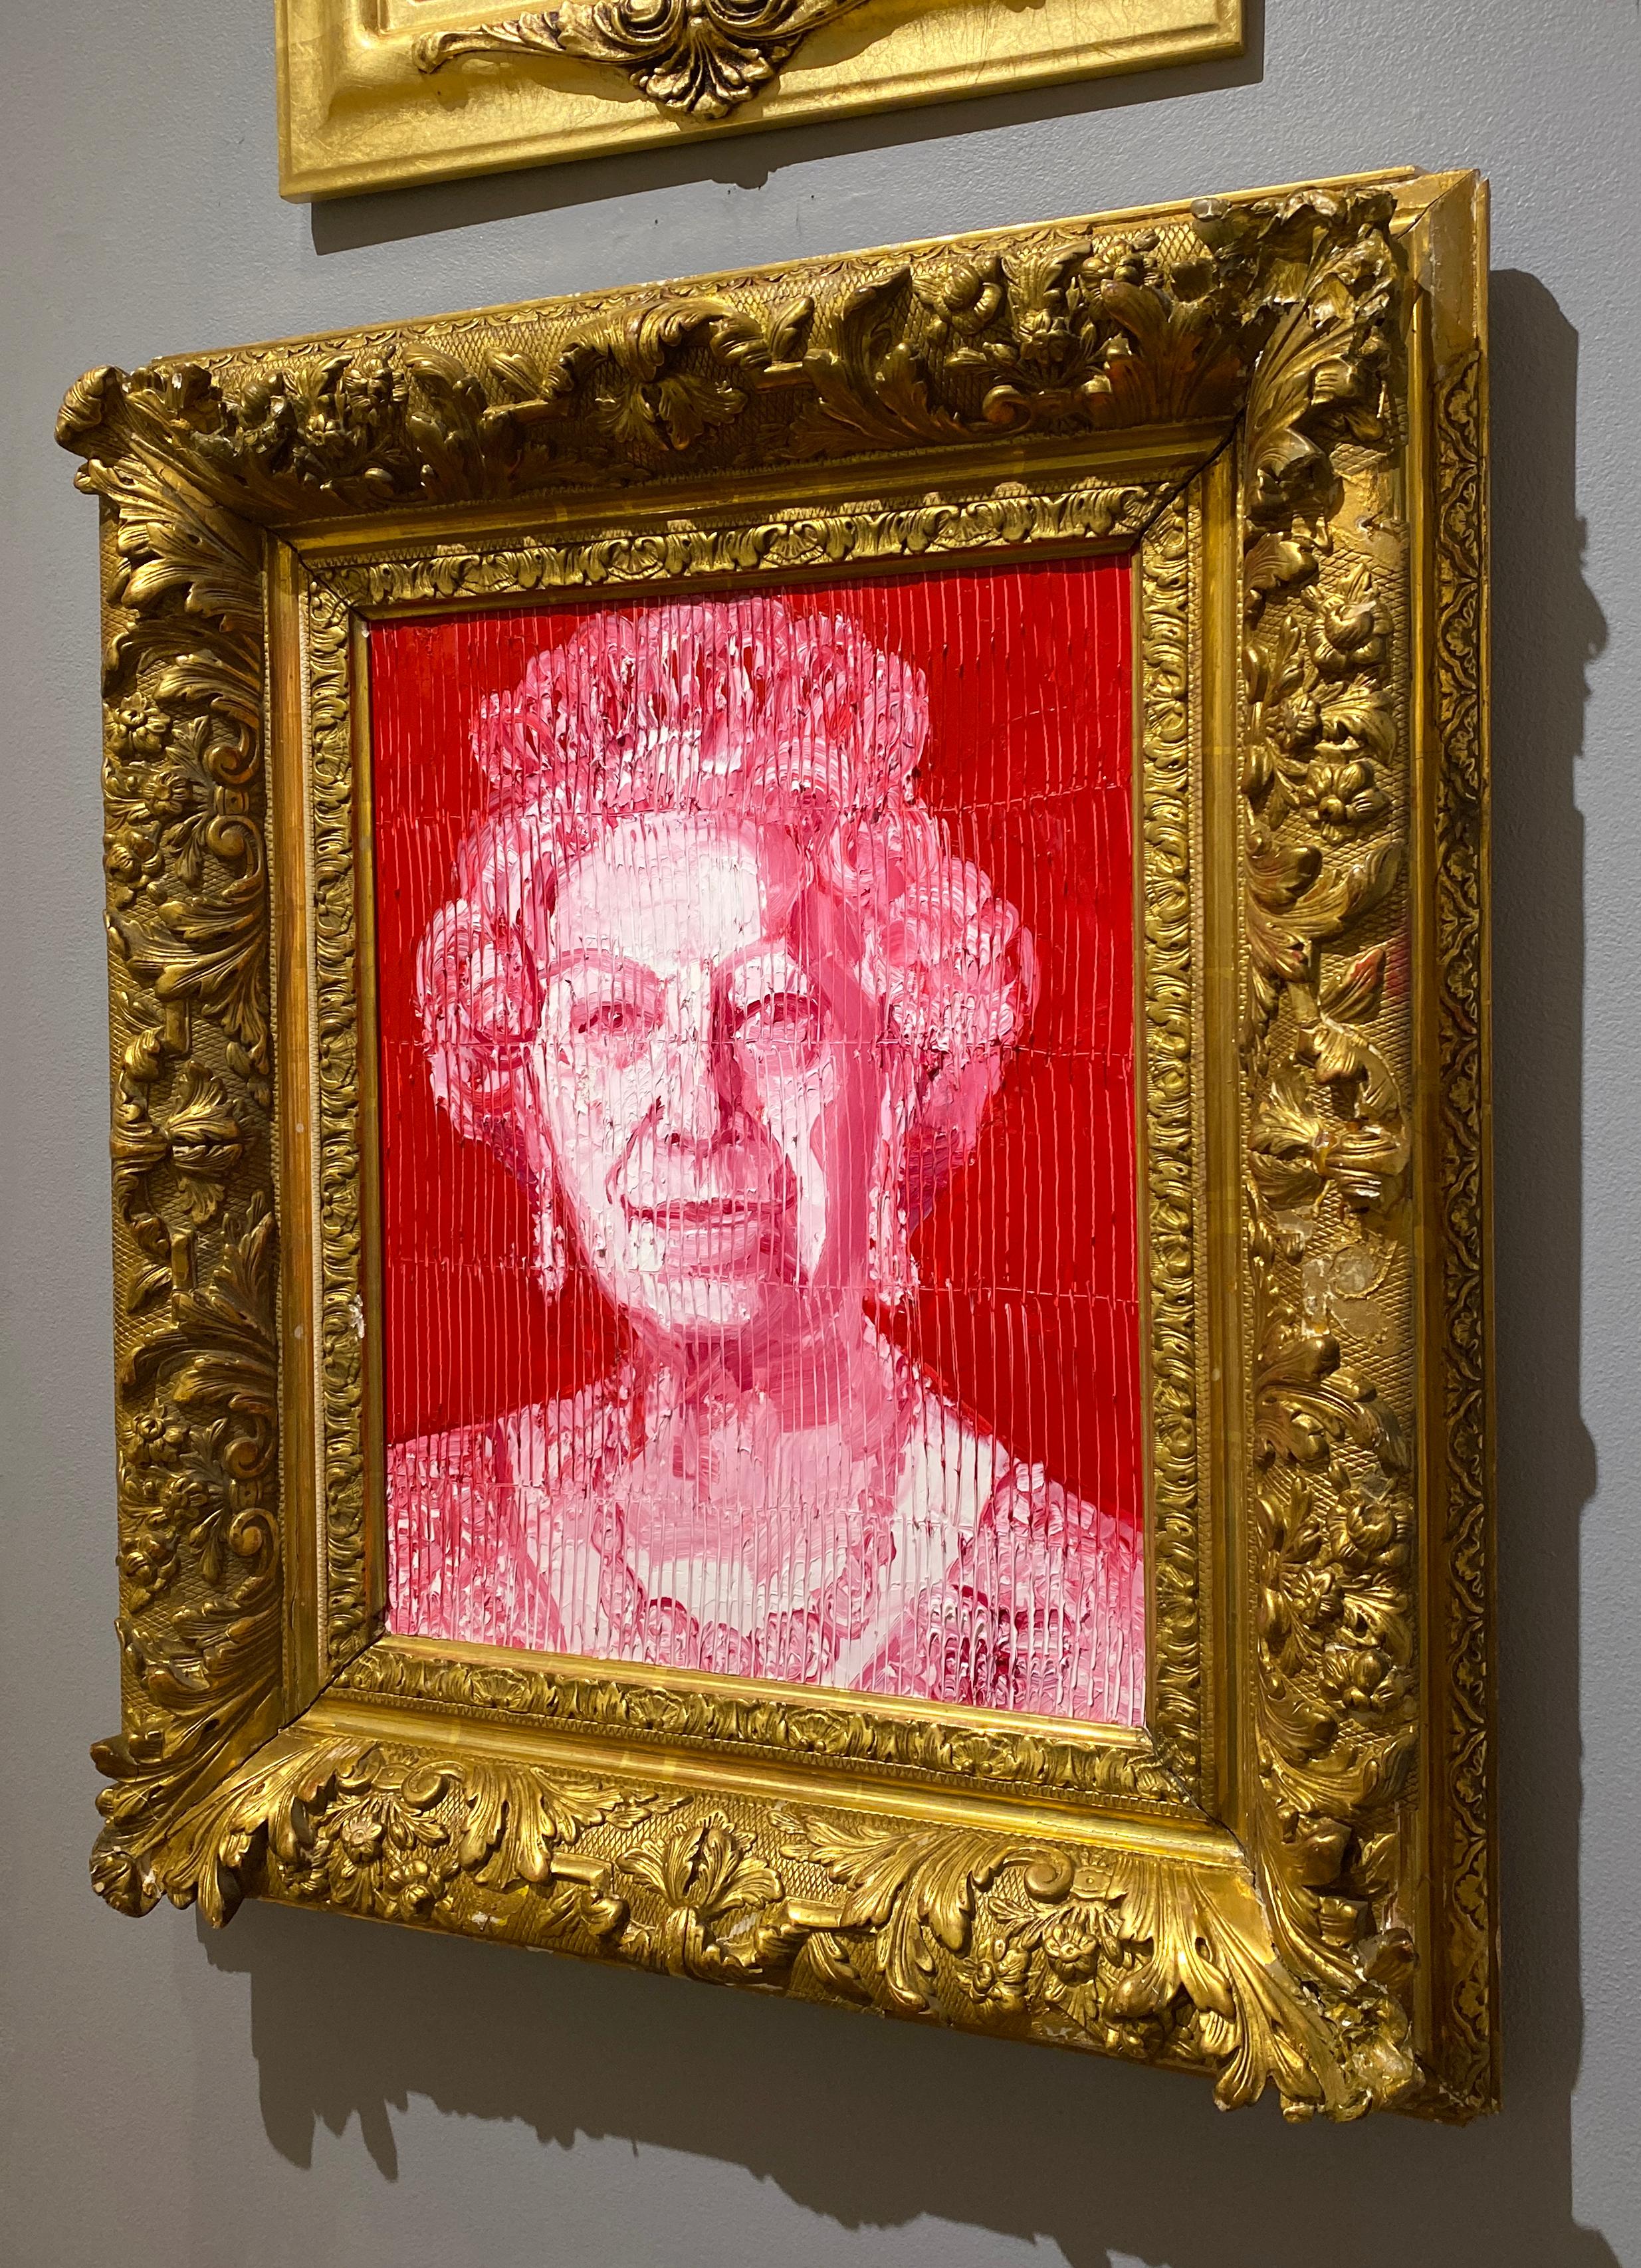 Artist:  Slonem, Hunt
Title:  Her Majesty
Series:  Red Queen
Date:  2021
Medium:  Oil on wood
Unframed Dimensions:  17.5